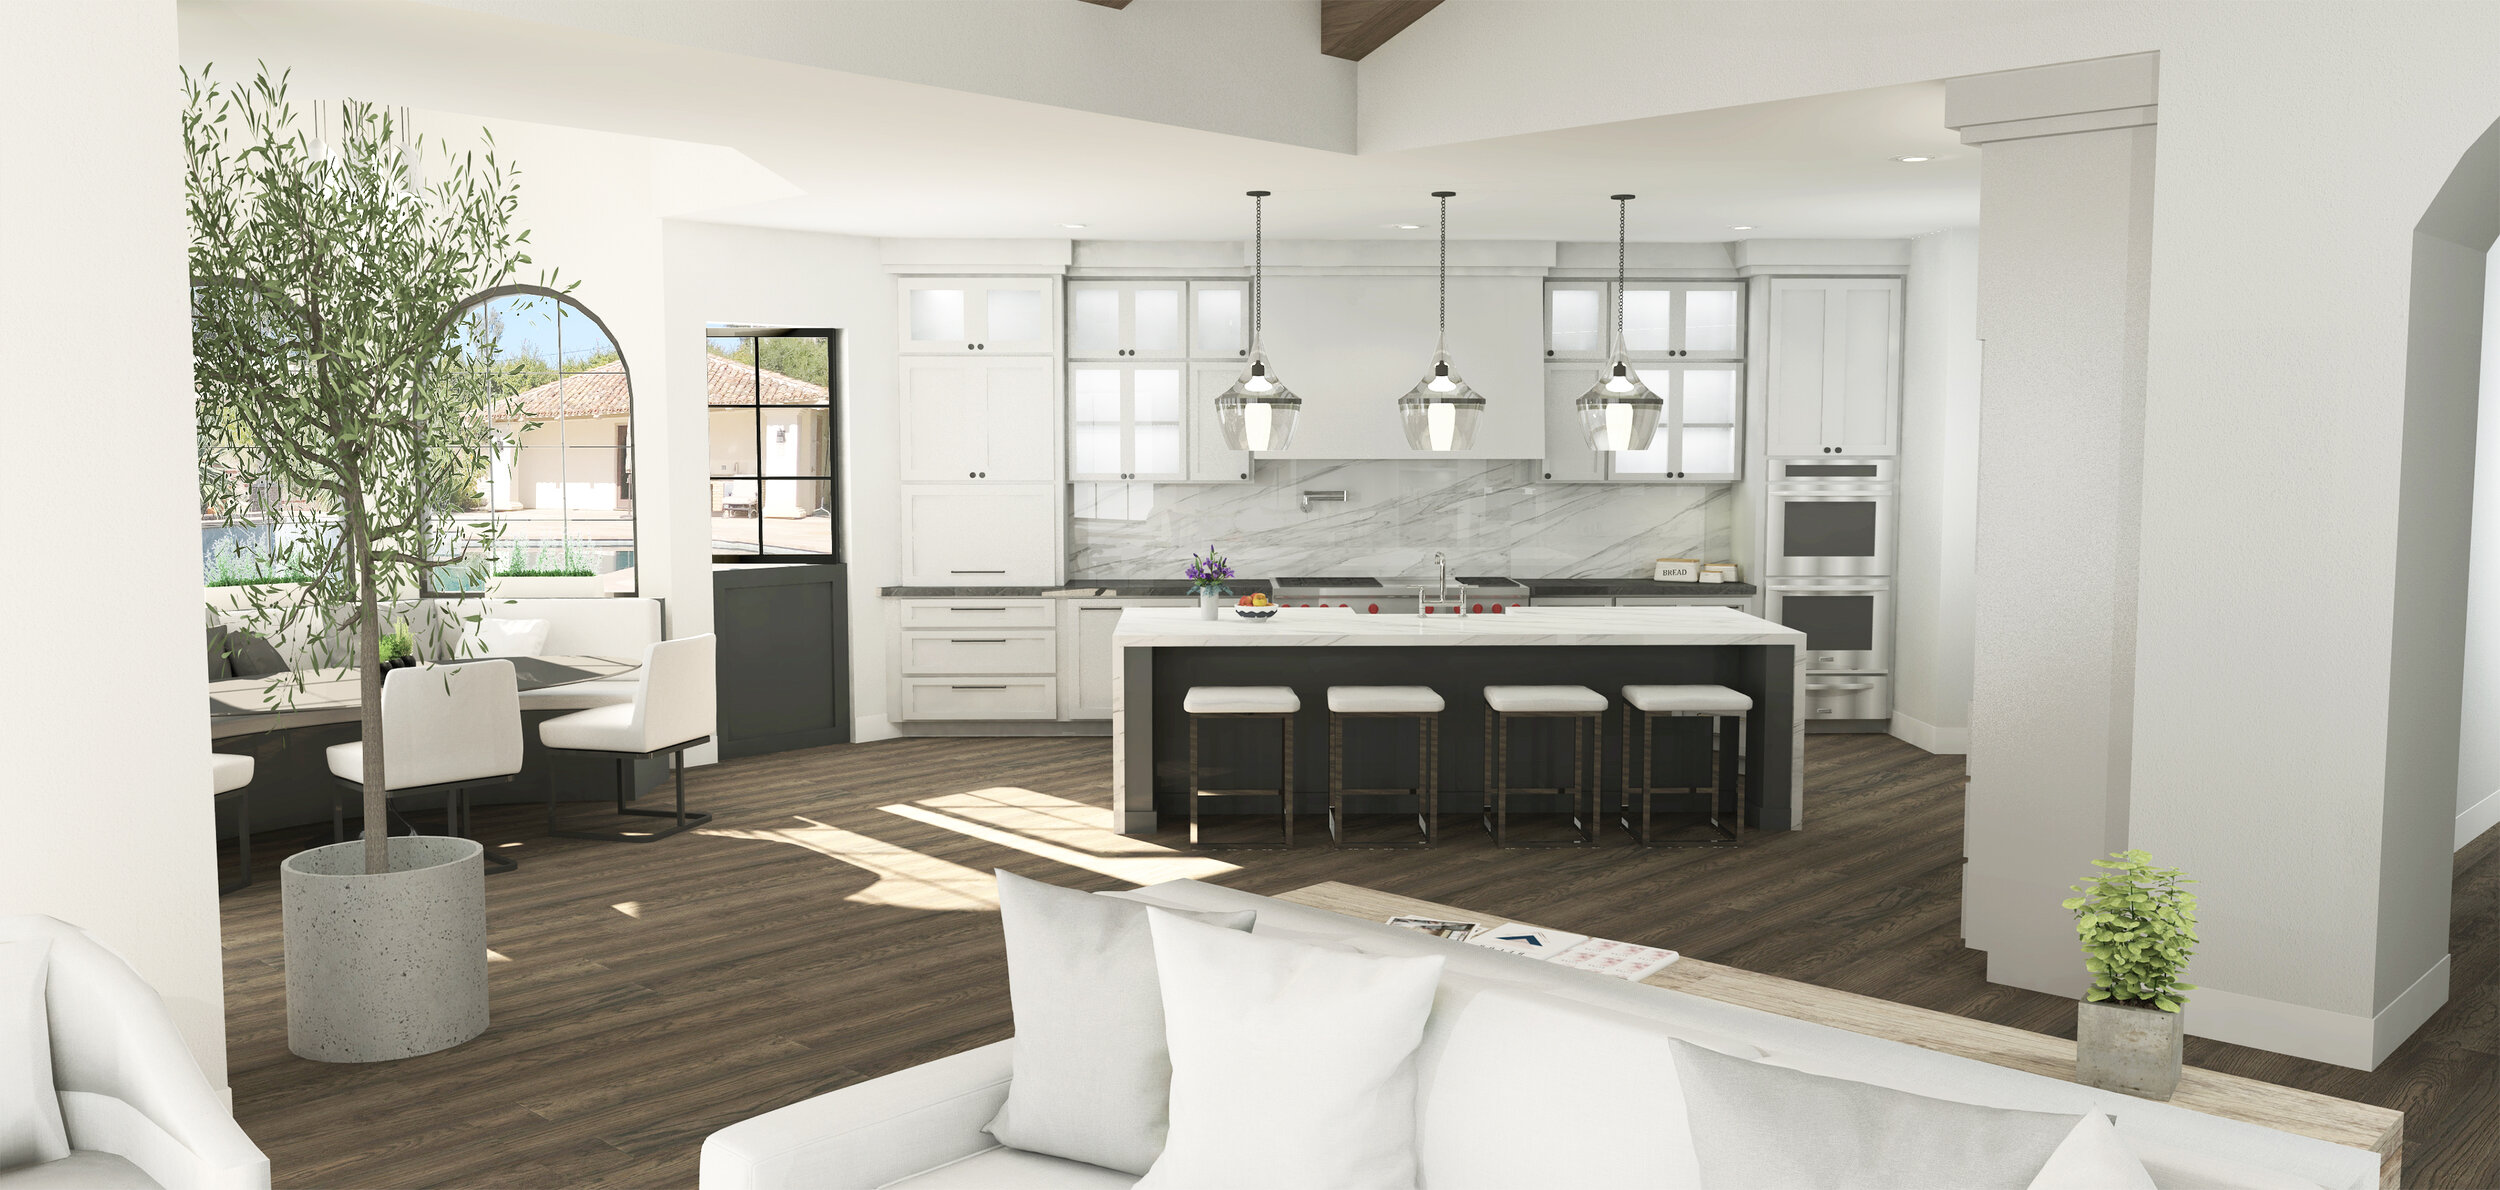 liz-tapper-interiors-kitchen-remodel-interior-design-rendering 2.jpg